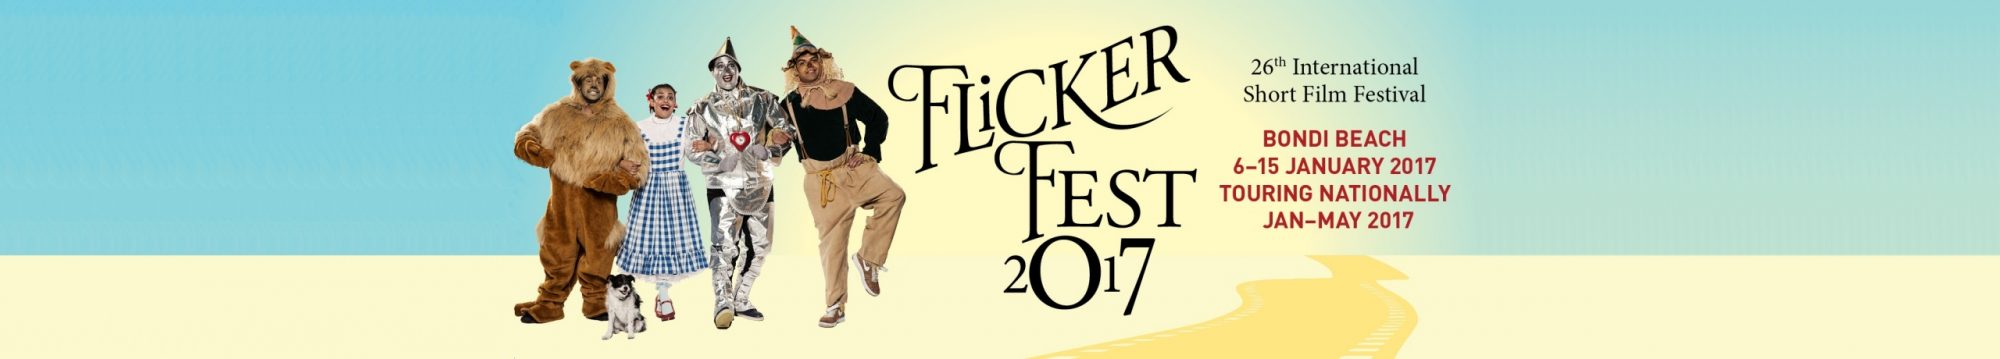 Flickerfest-2017-carousel-artwork